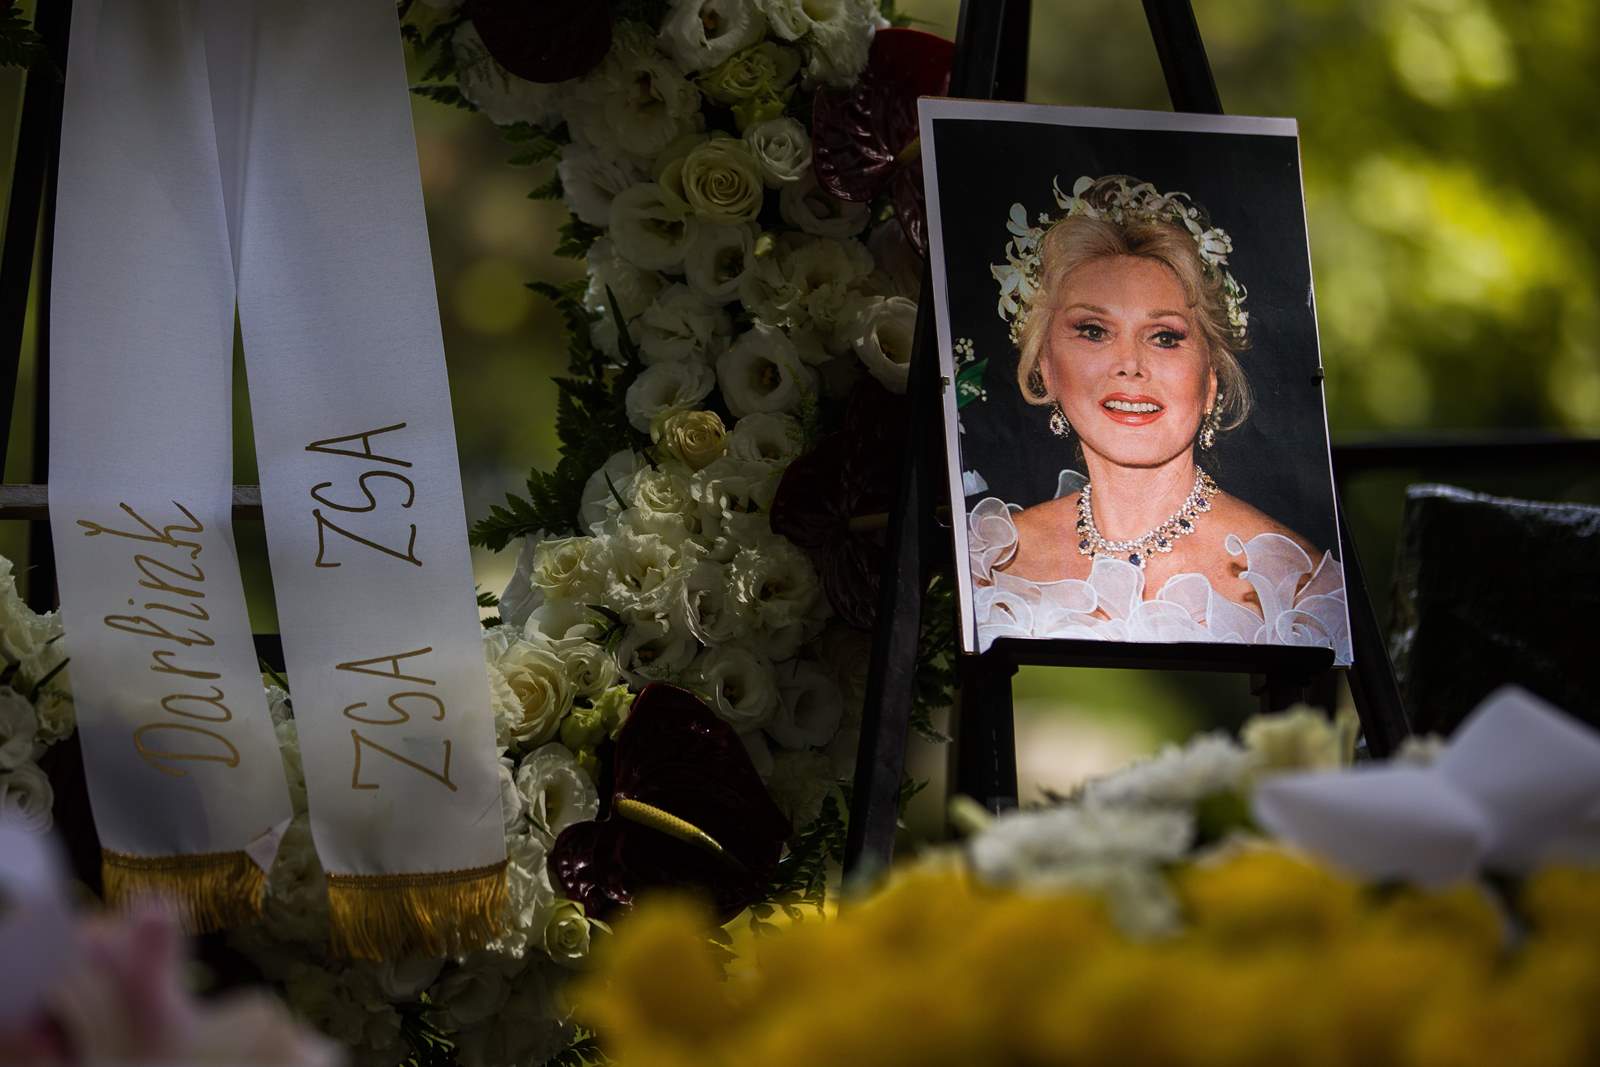 Zsazsa Gábor 的骨灰於週二安葬在布達佩斯阜美街的墓地，距她去世將近五年。